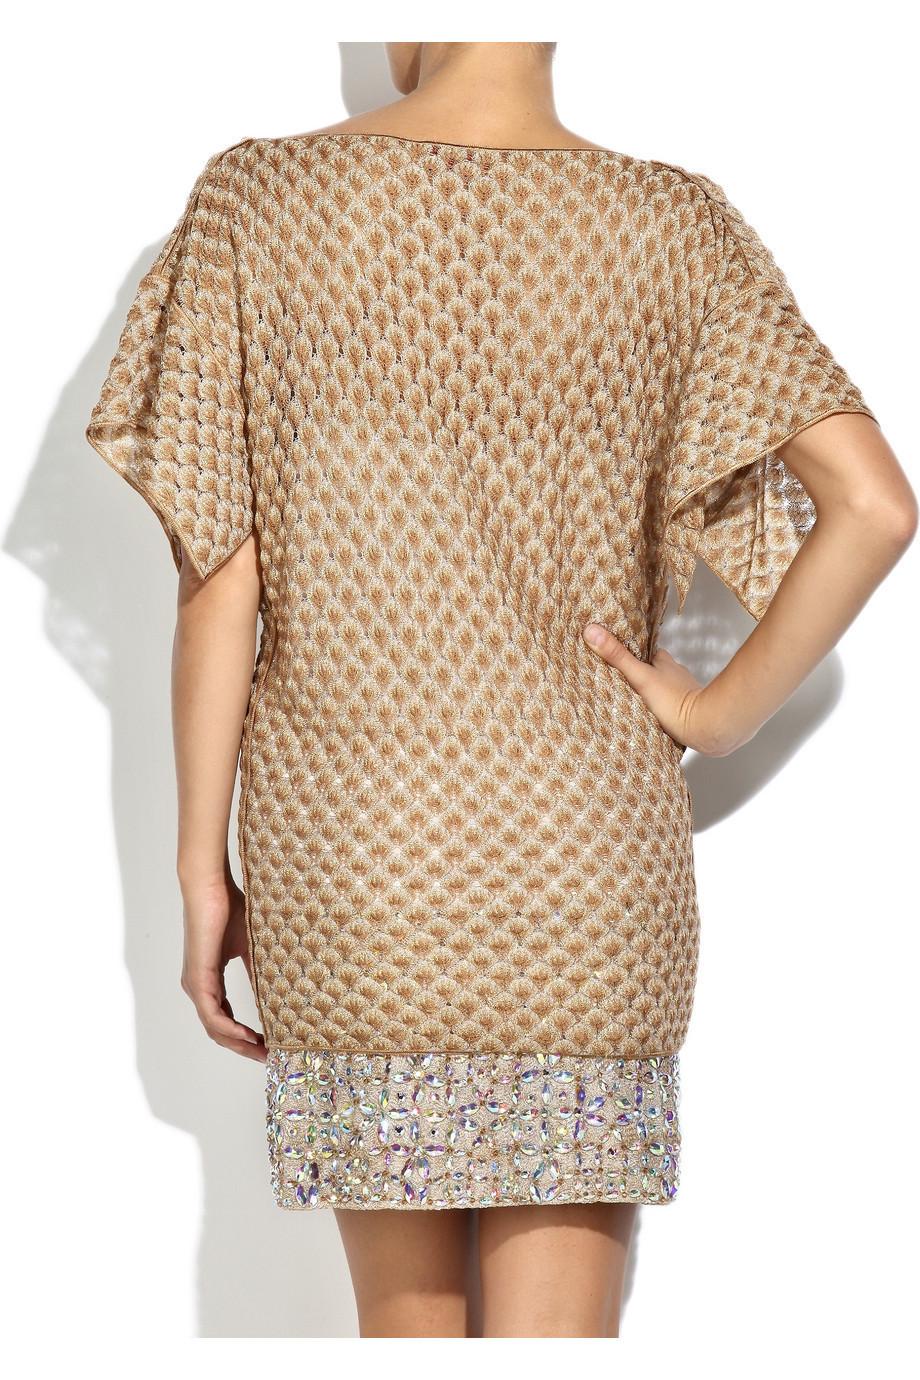 Women's NEW Missoni Gold Metallic Crochet Knit Beaded Crystal Dress 42 For Sale